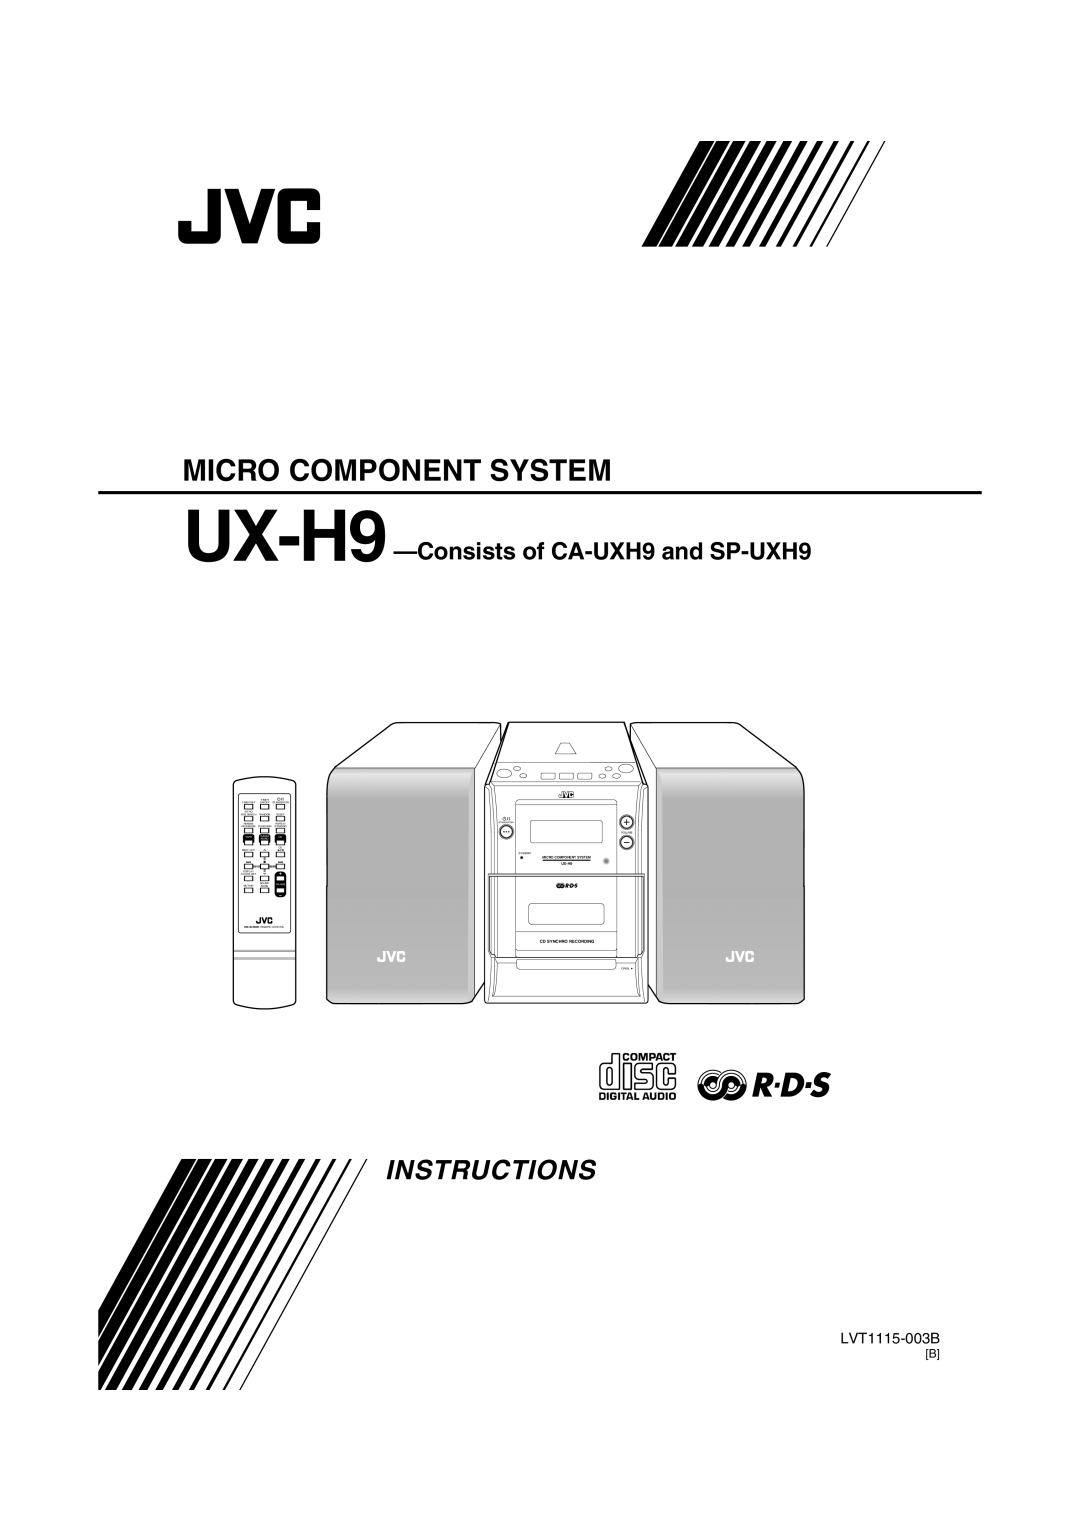 JVC 0603MWMMDWORI manual Instructions, LVT1115-003B, Micro Component System, UX-H9-Consistsof CA-UXH9and SP-UXH9, Volume 